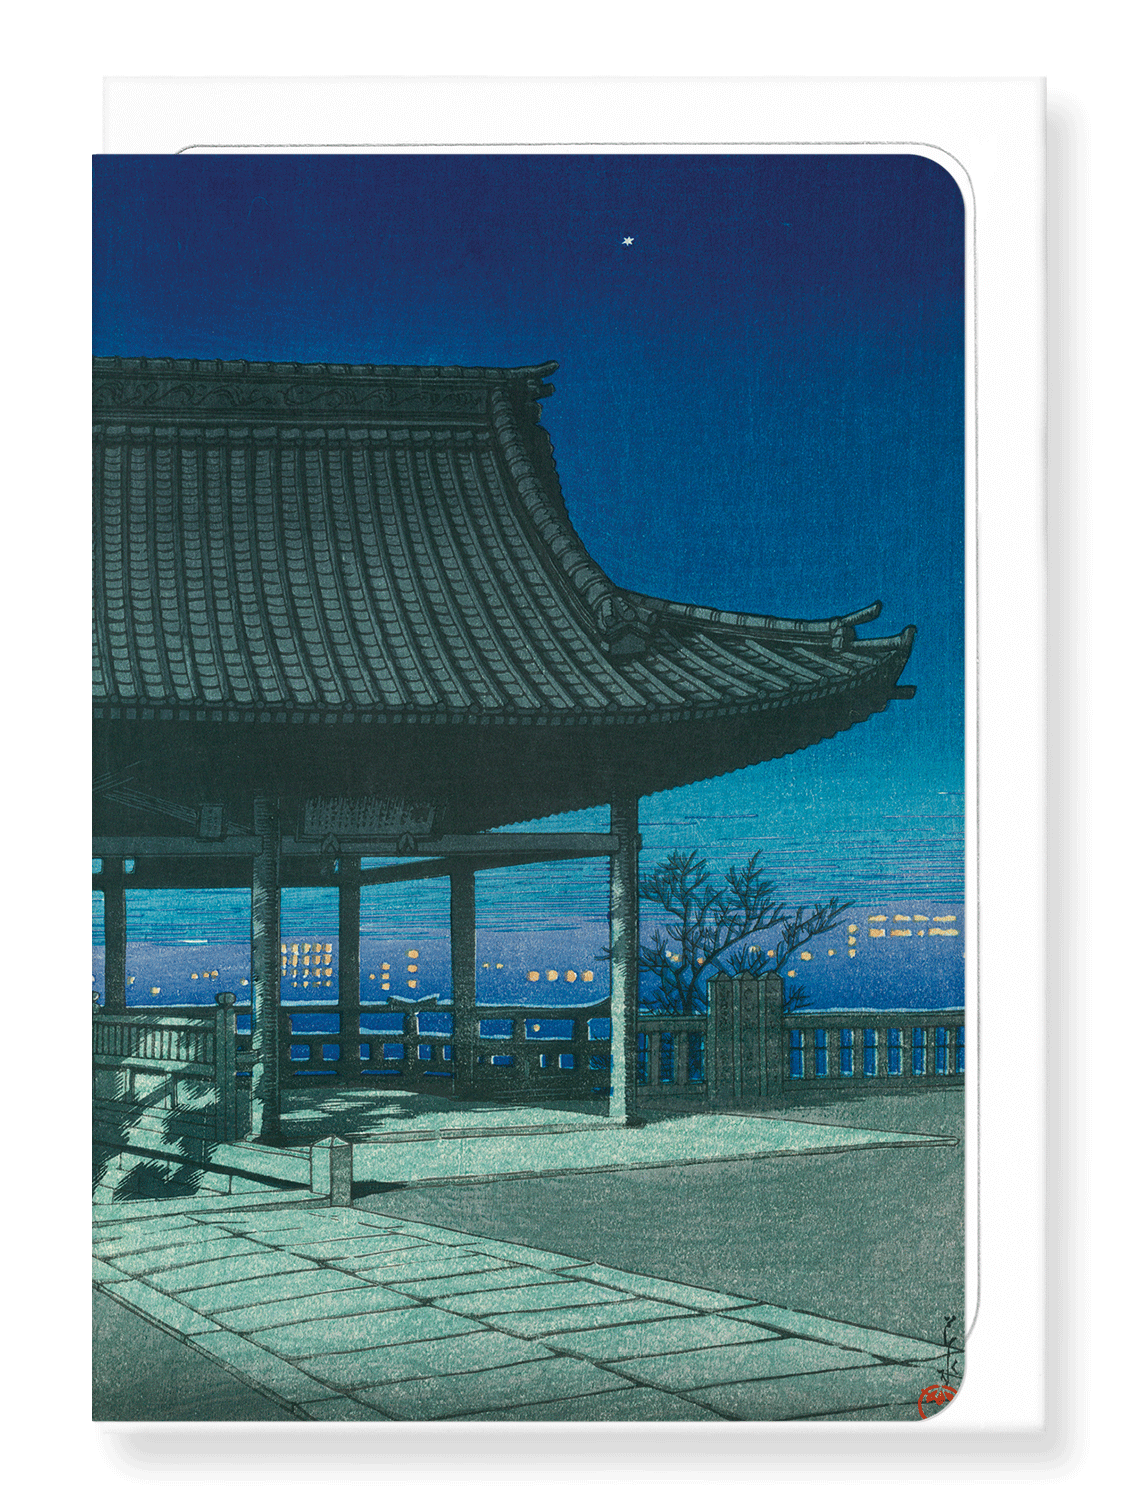 Ezen Designs - Star in kozu osaka - Greeting Card - Front